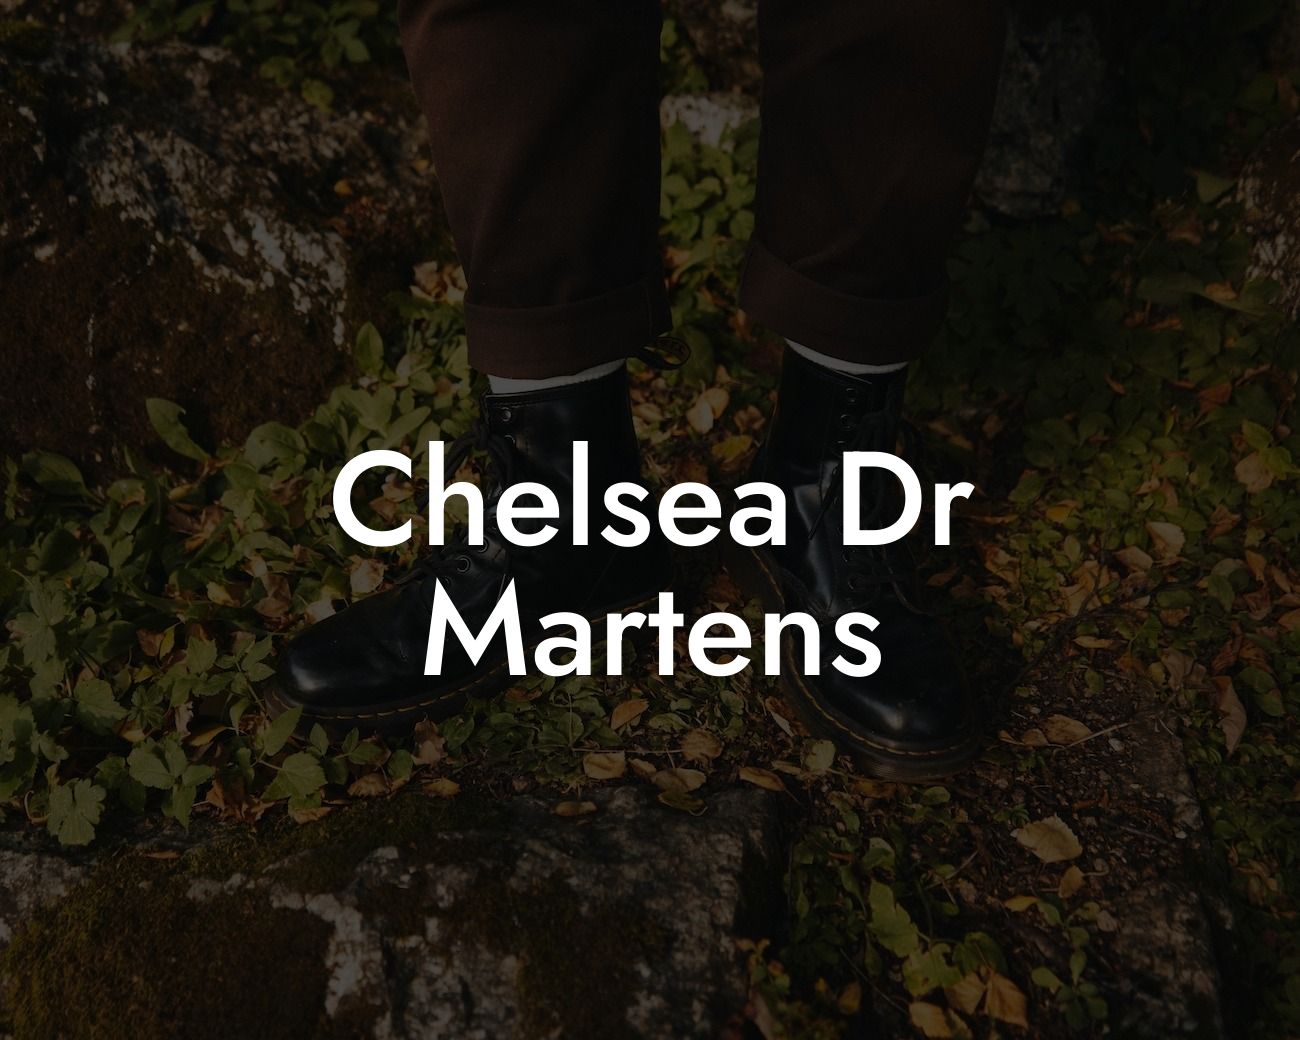 Chelsea Dr Martens